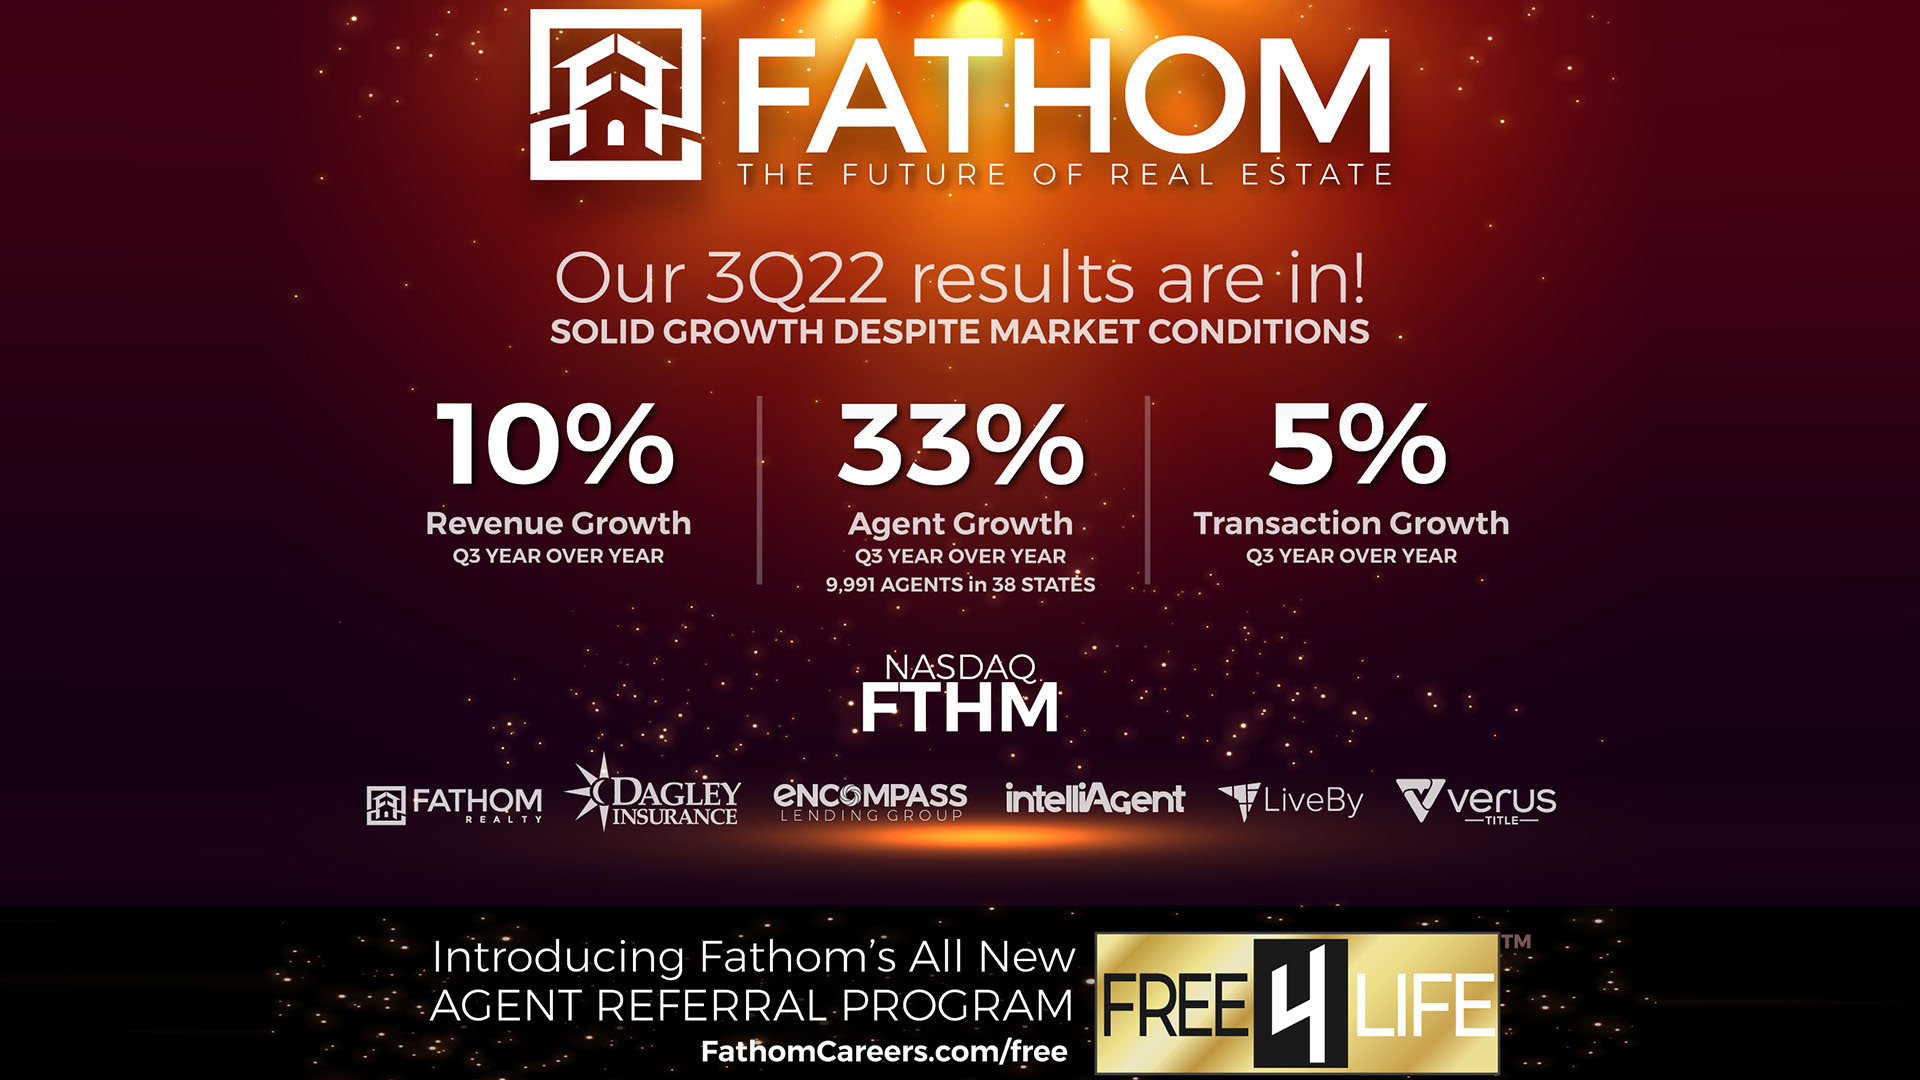 Featured image for “Fathom’s Third Quarter 2022 Results Show Growth Through a Shifting Market”